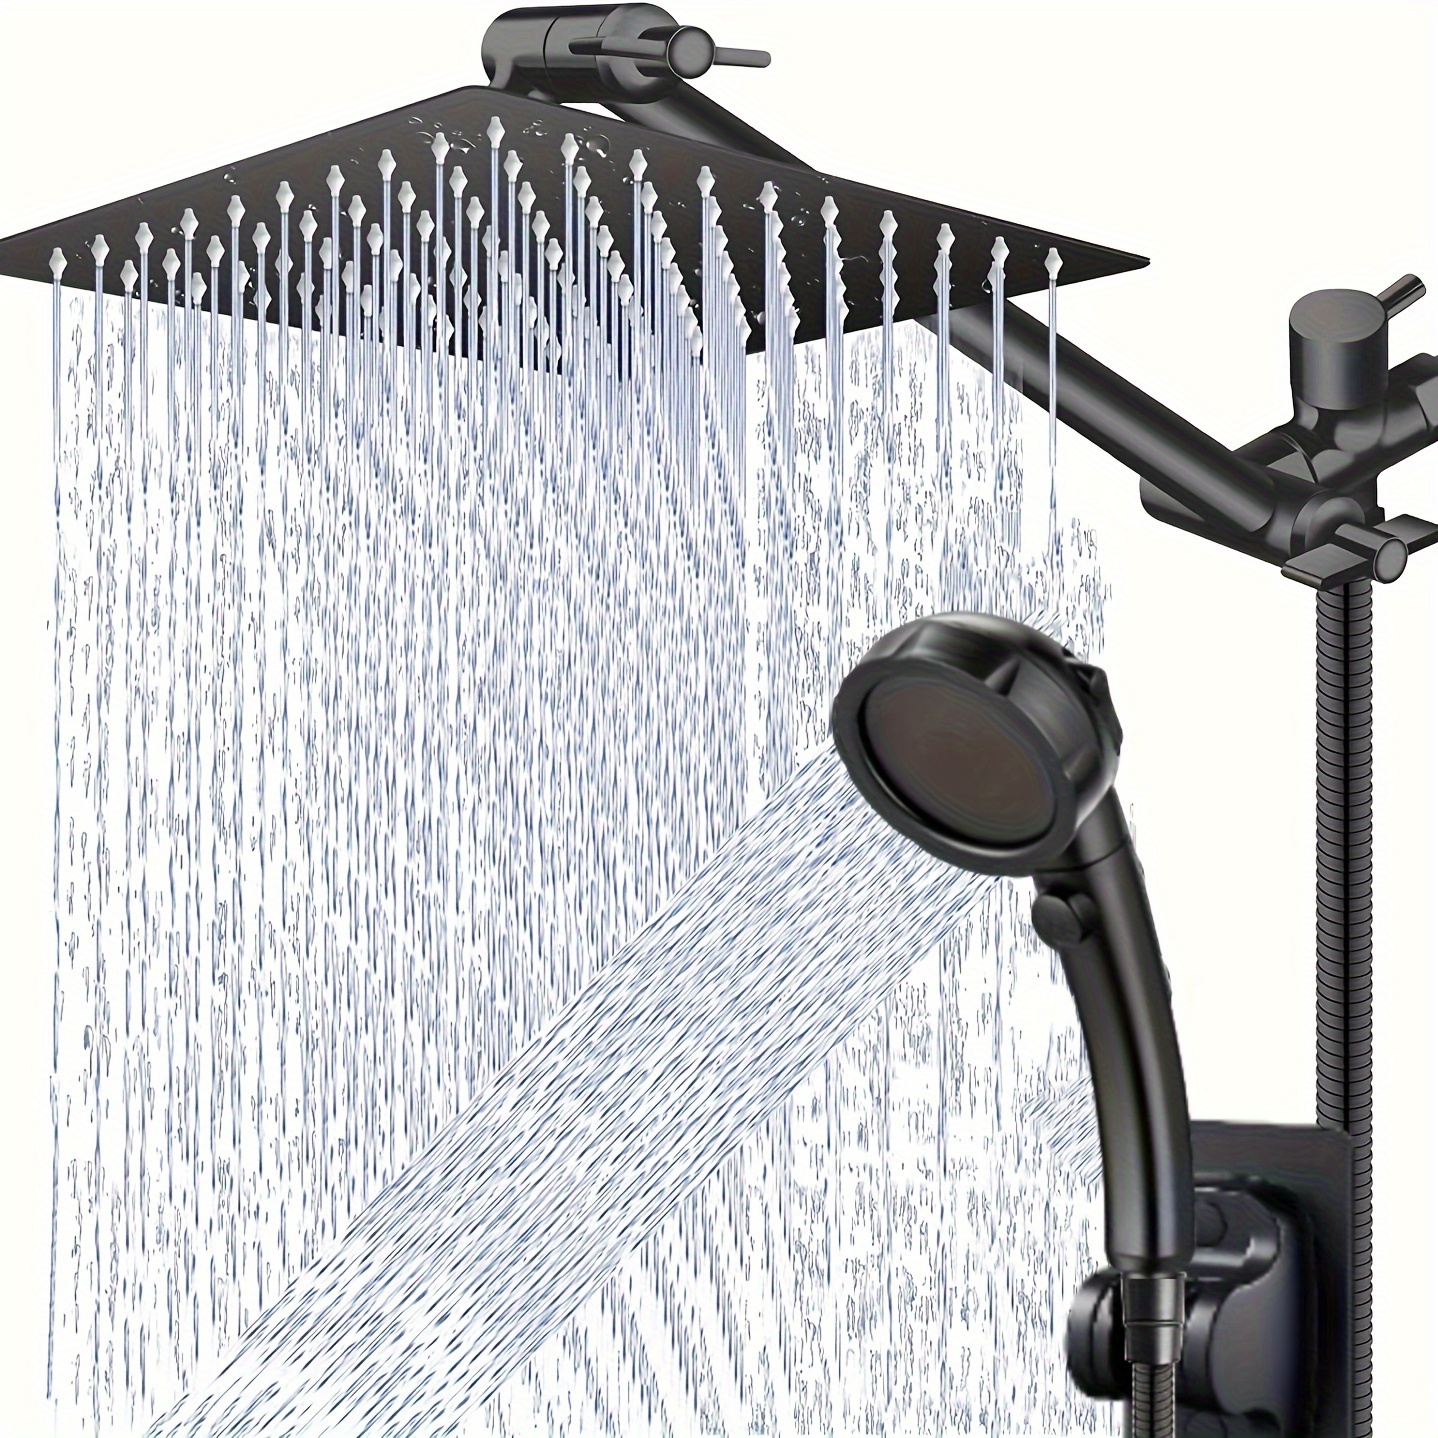 https://img.kwcdn.com/product/built-in-electric-cleaning-rainwater-shower-nozzle/d69d2f15w98k18-3eb5dc5e/Fancyalgo/VirtualModelMatting/65a9108478e78f4a019a6f4f5496d80f.jpg?imageView2/2/w/500/q/60/format/webp